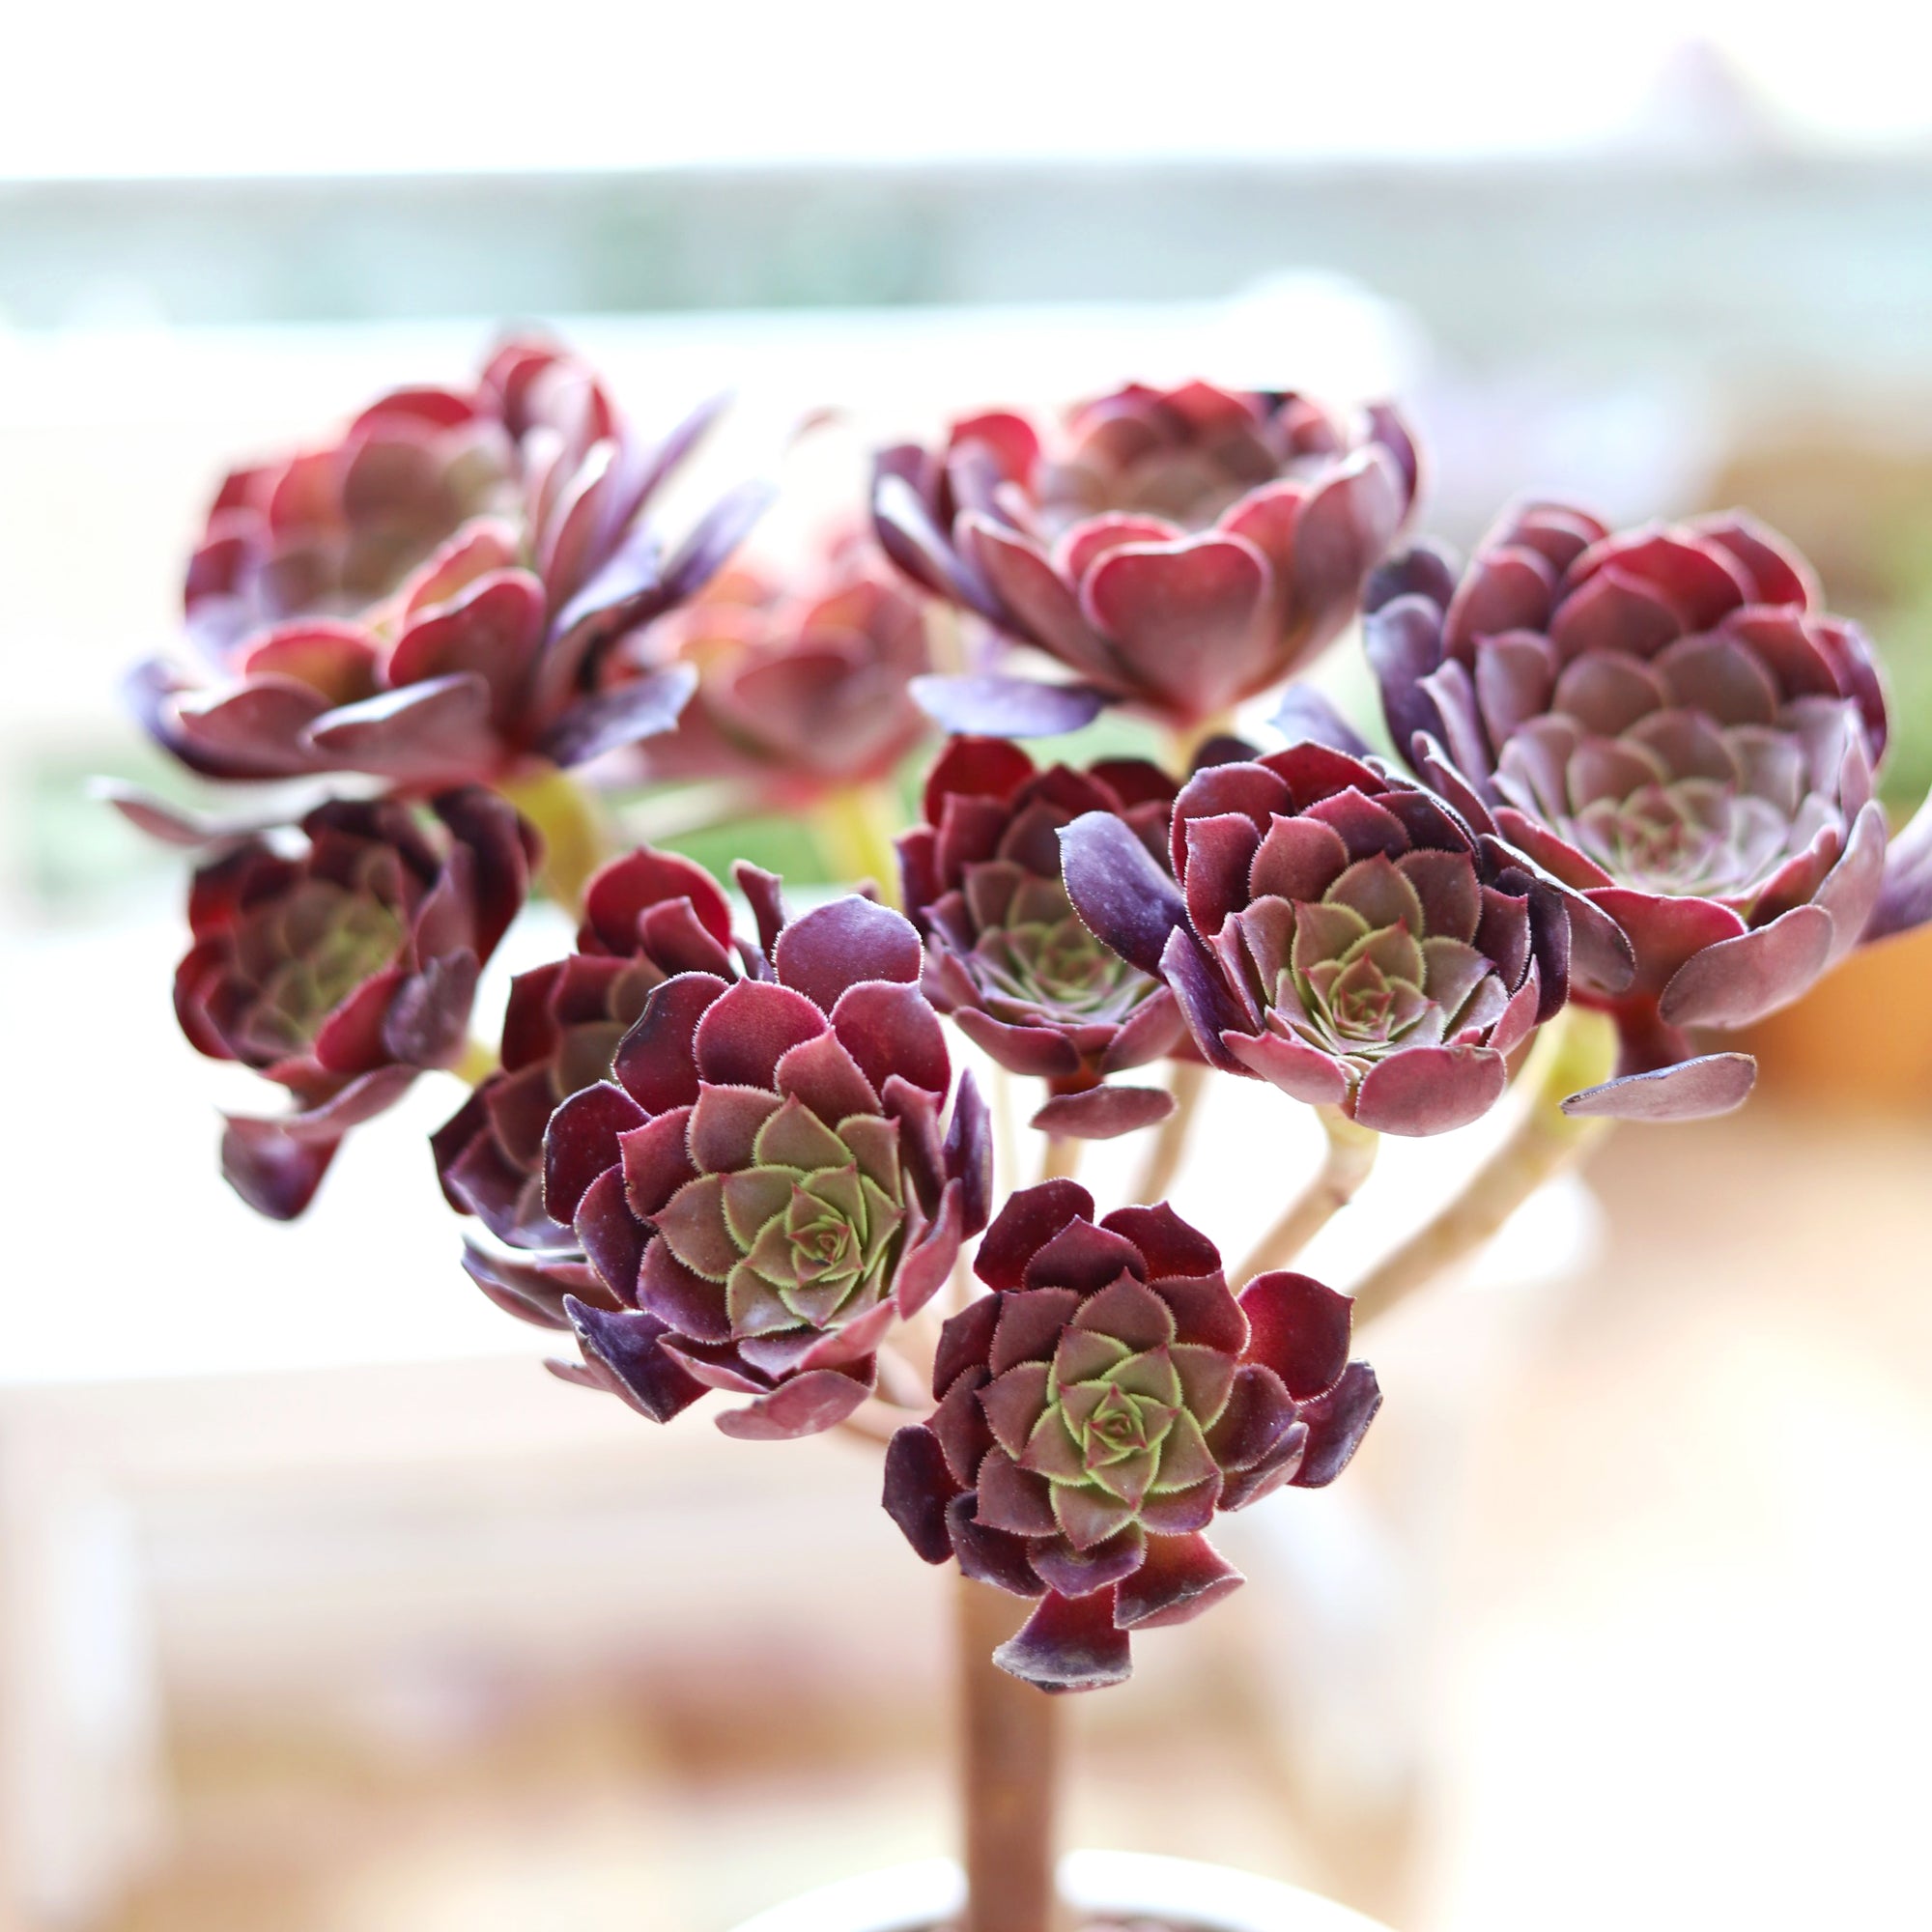 Aeonium Black Rose Zwartkop Succulent Plant for sale, Holiday decor ideas, Succulent gifts 